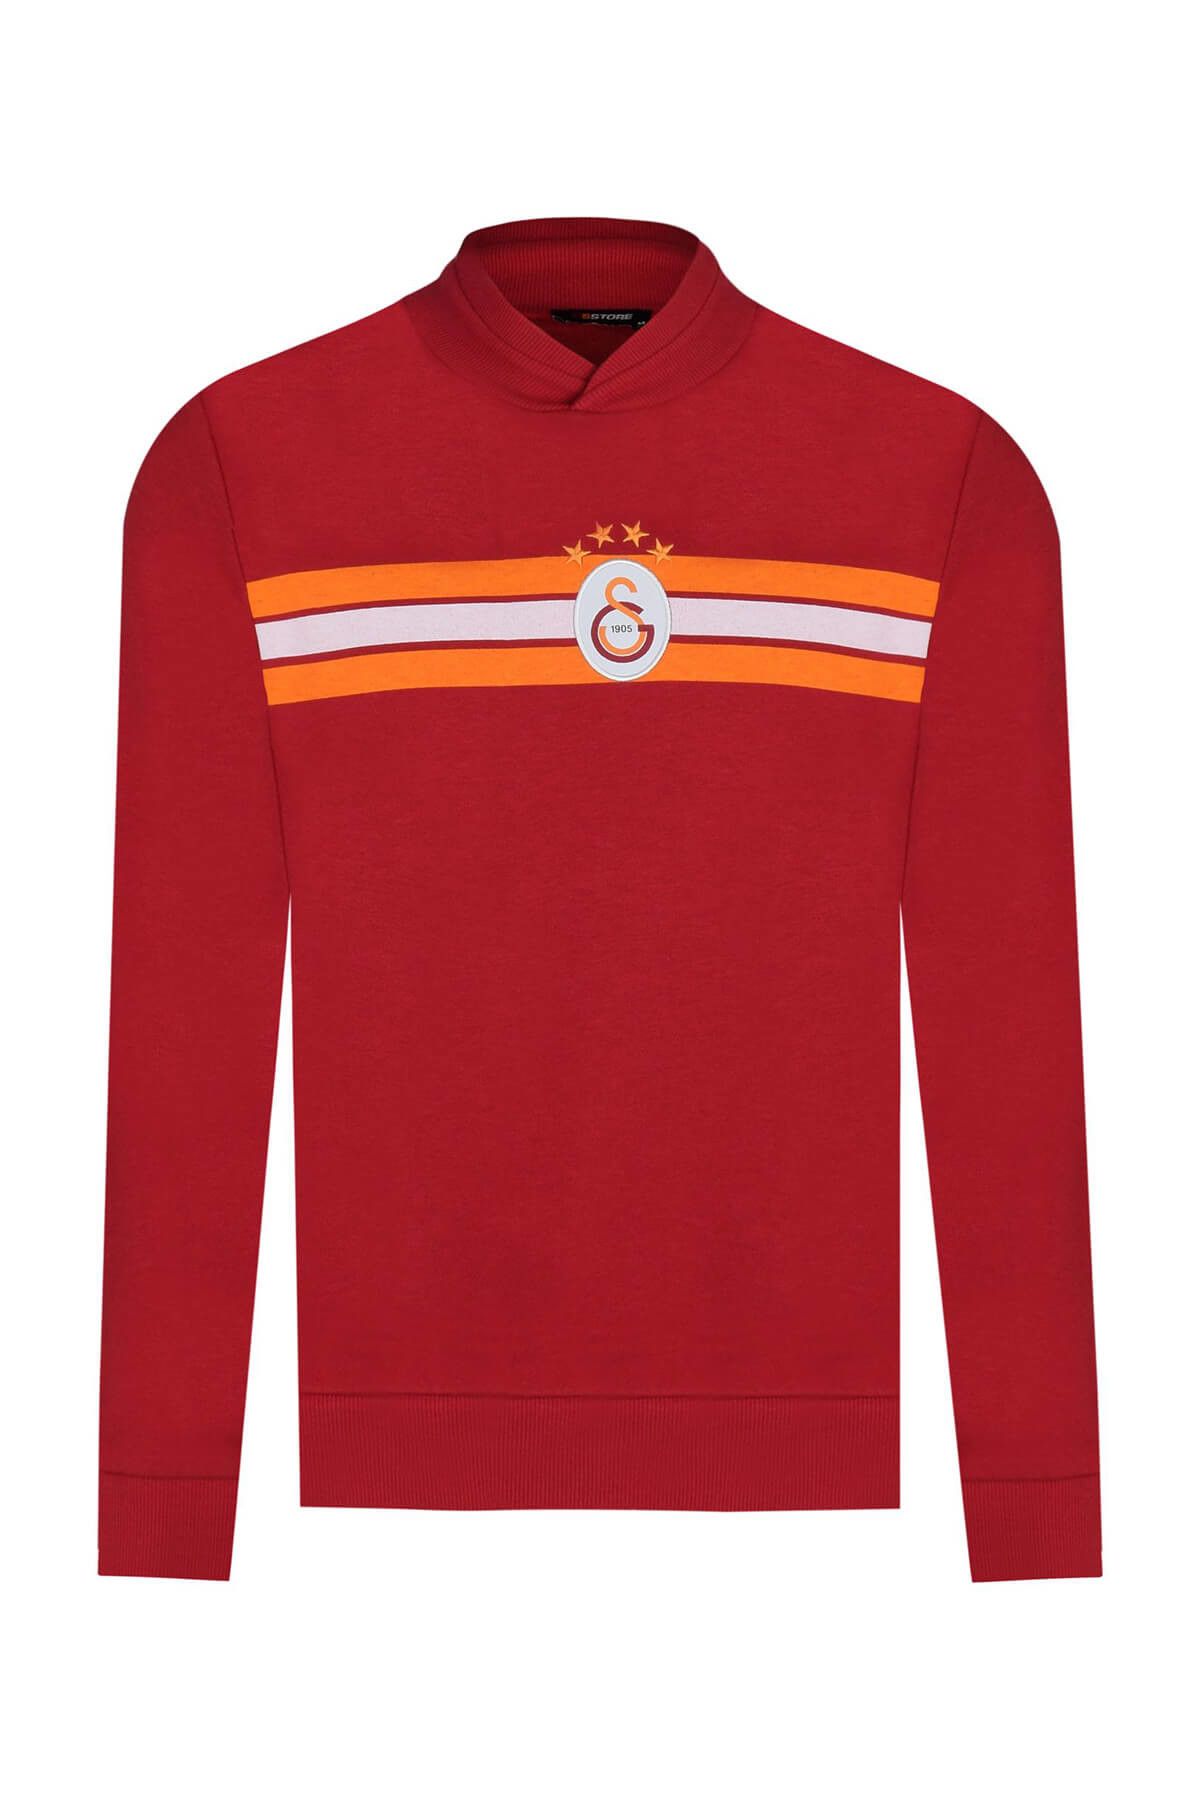 Galatasaray Galatasaray Çocuk Sweatshirt K023-C85038